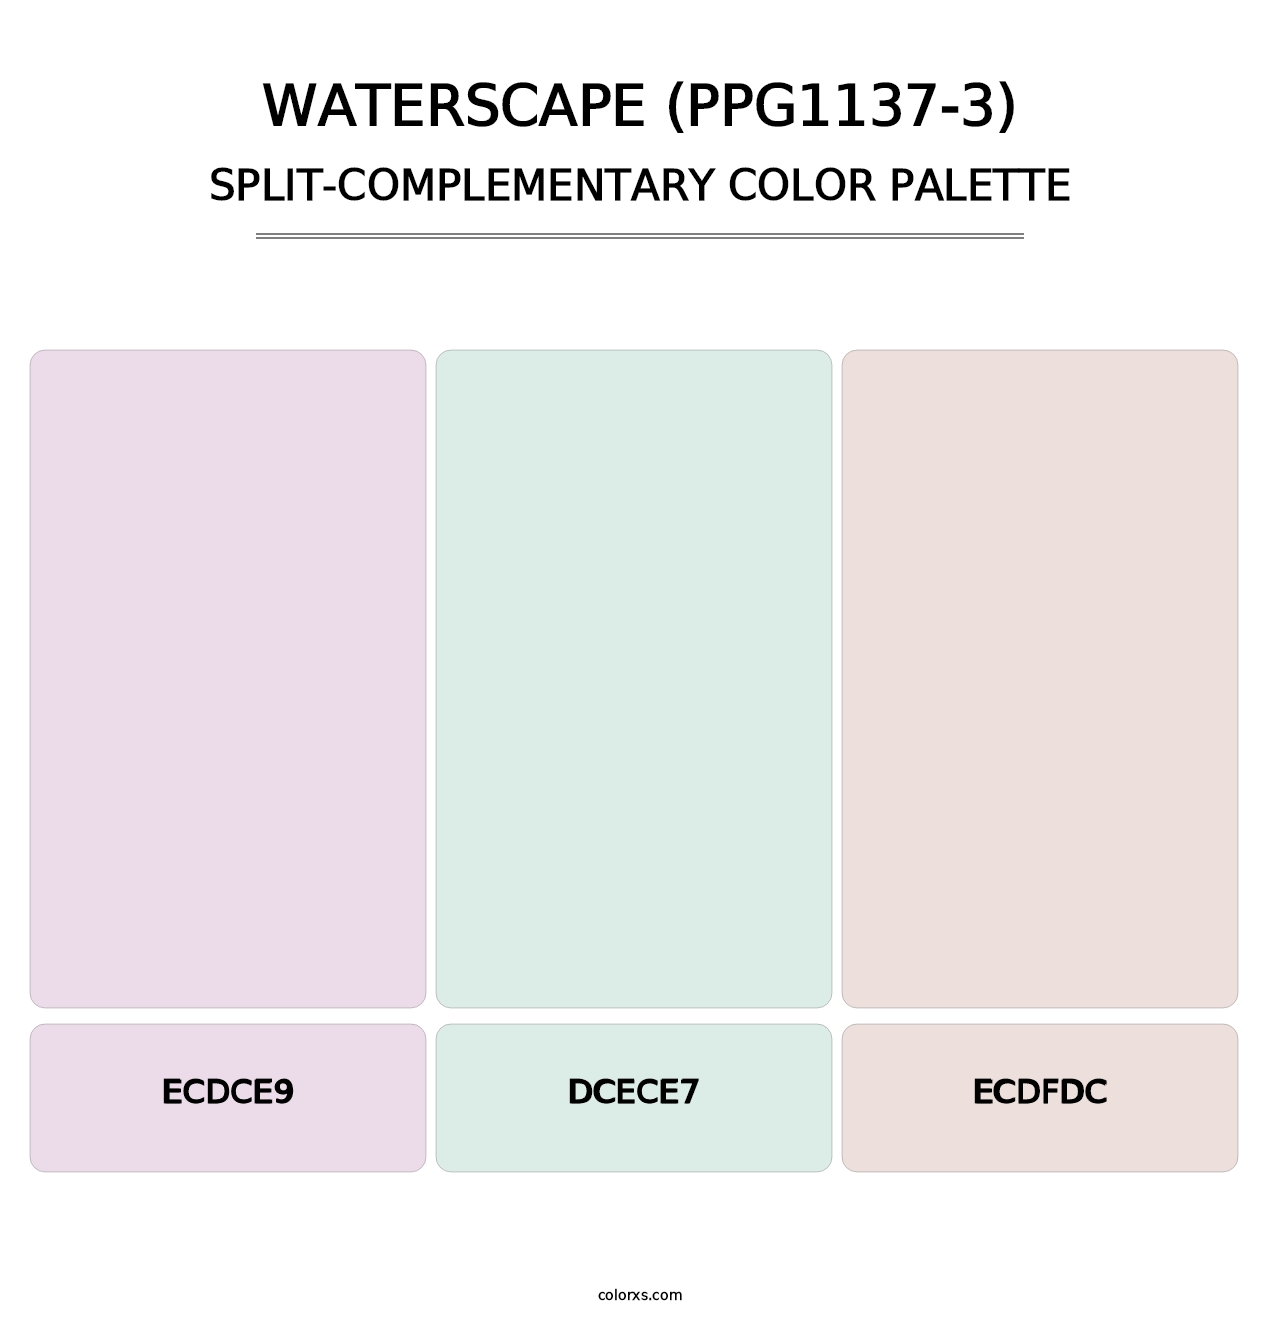 Waterscape (PPG1137-3) - Split-Complementary Color Palette